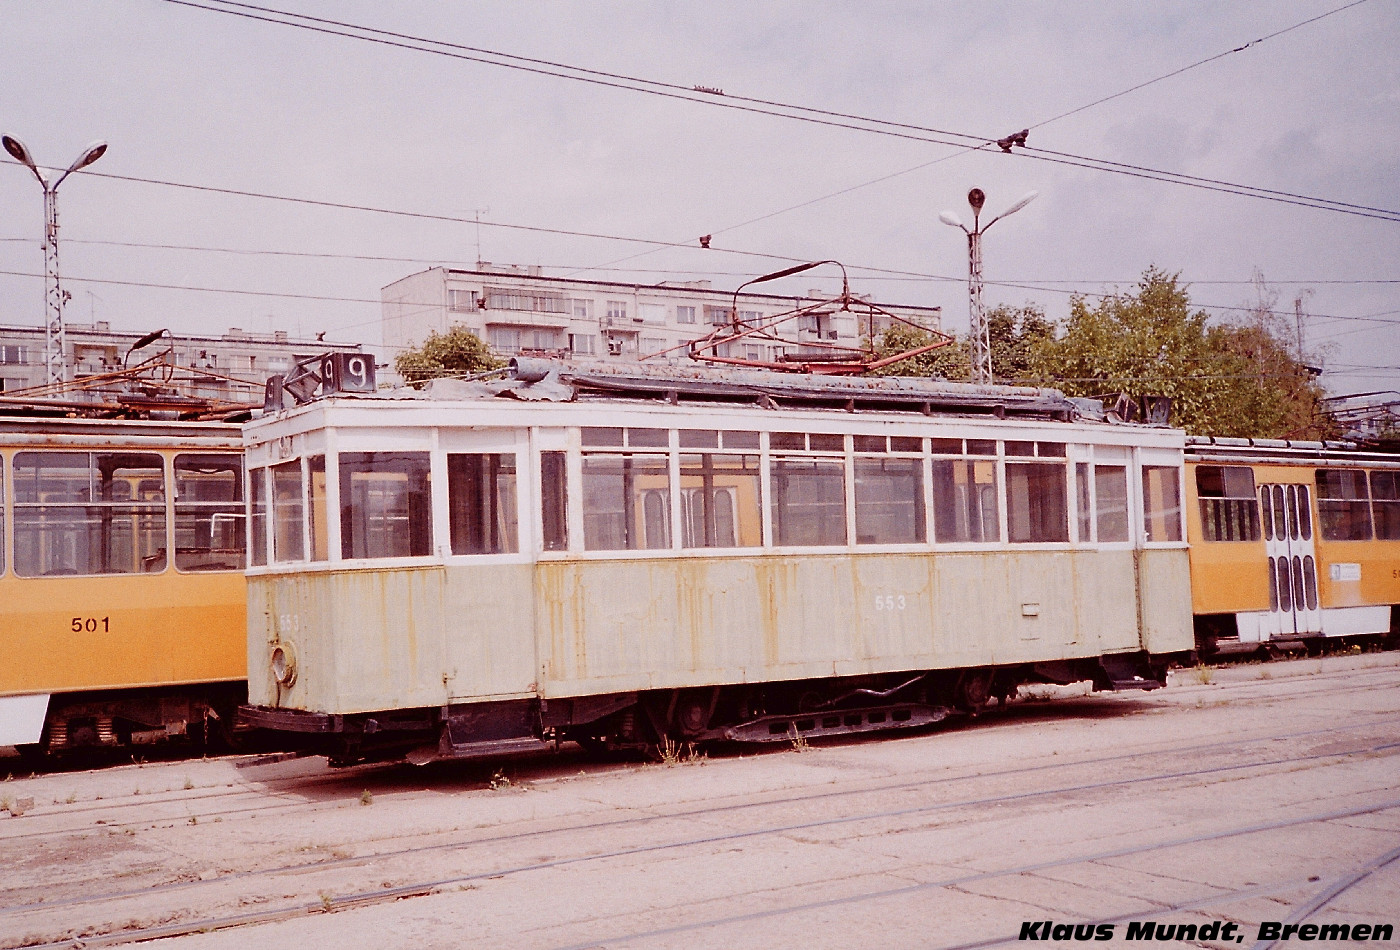 Miscellaneous 2-axle tram #553